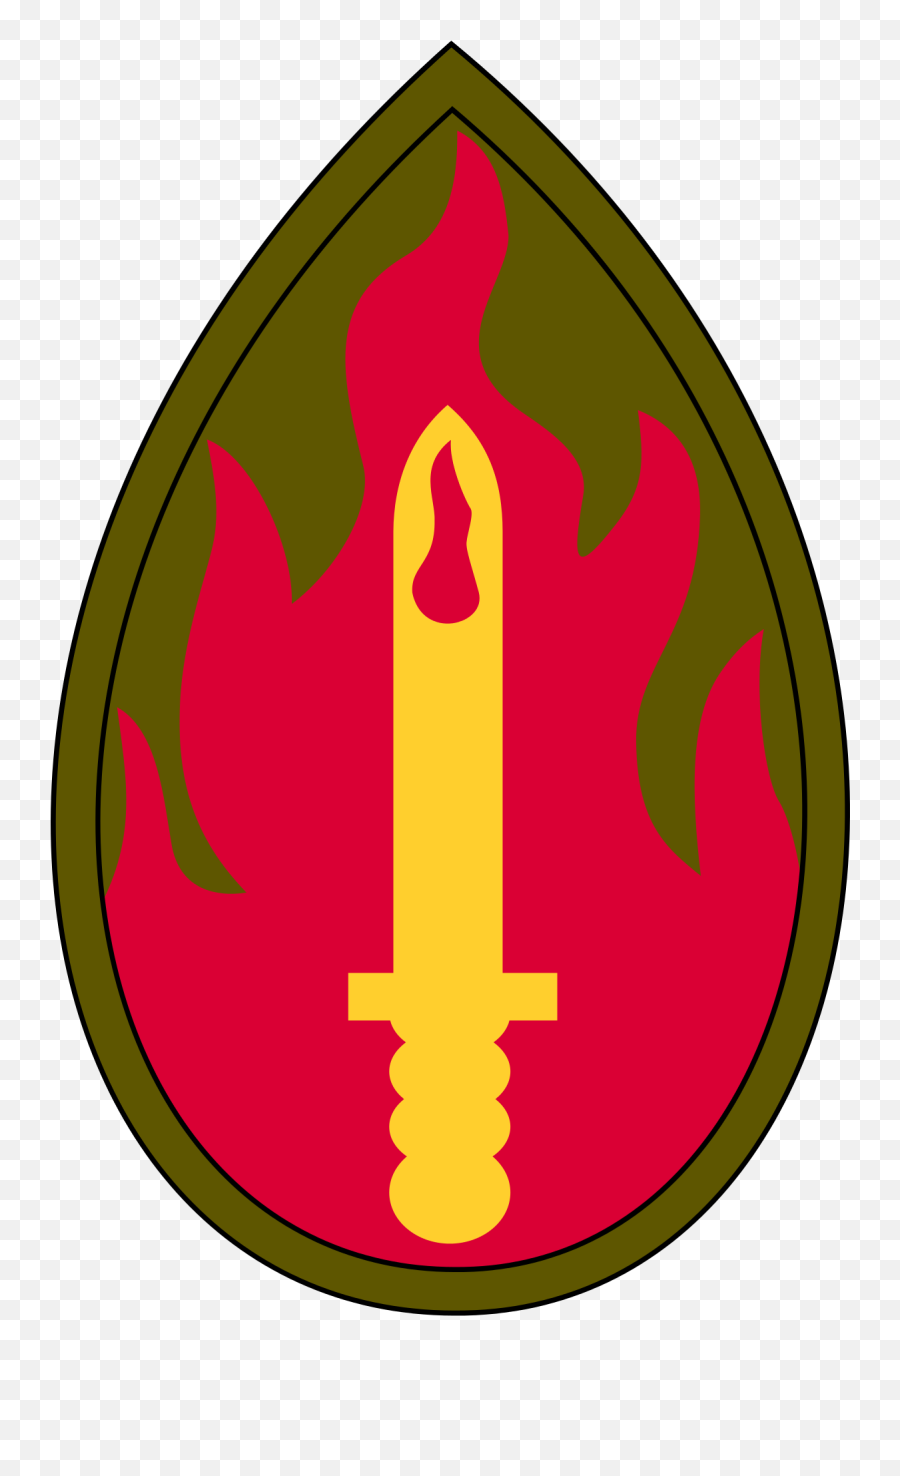 Fire Magic Circle Png Image - 63rd Infantry Division,Magic Circle Png